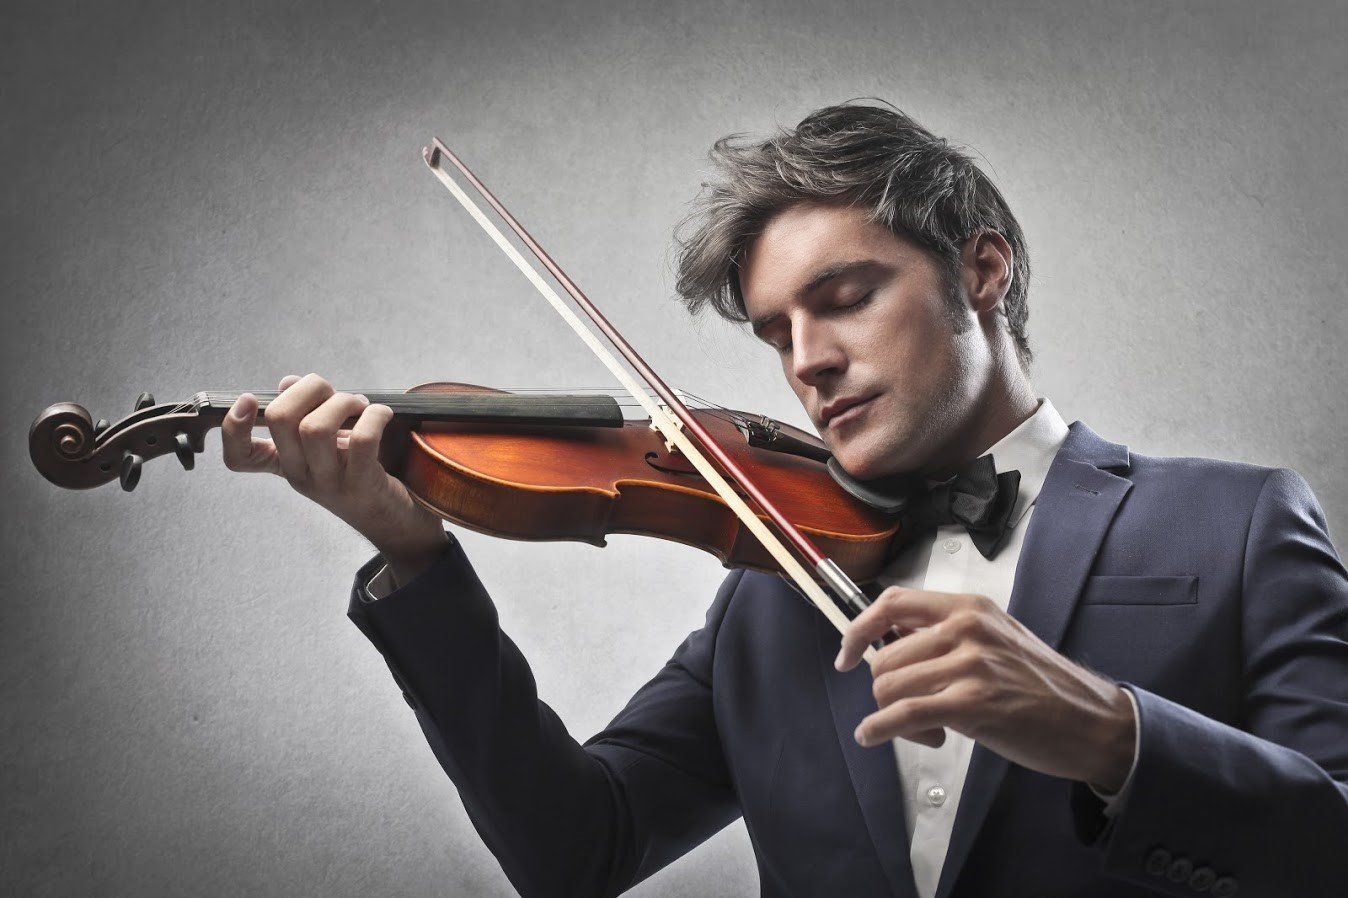 Hearing Aid — Man Playing A Violin in Sanford FL